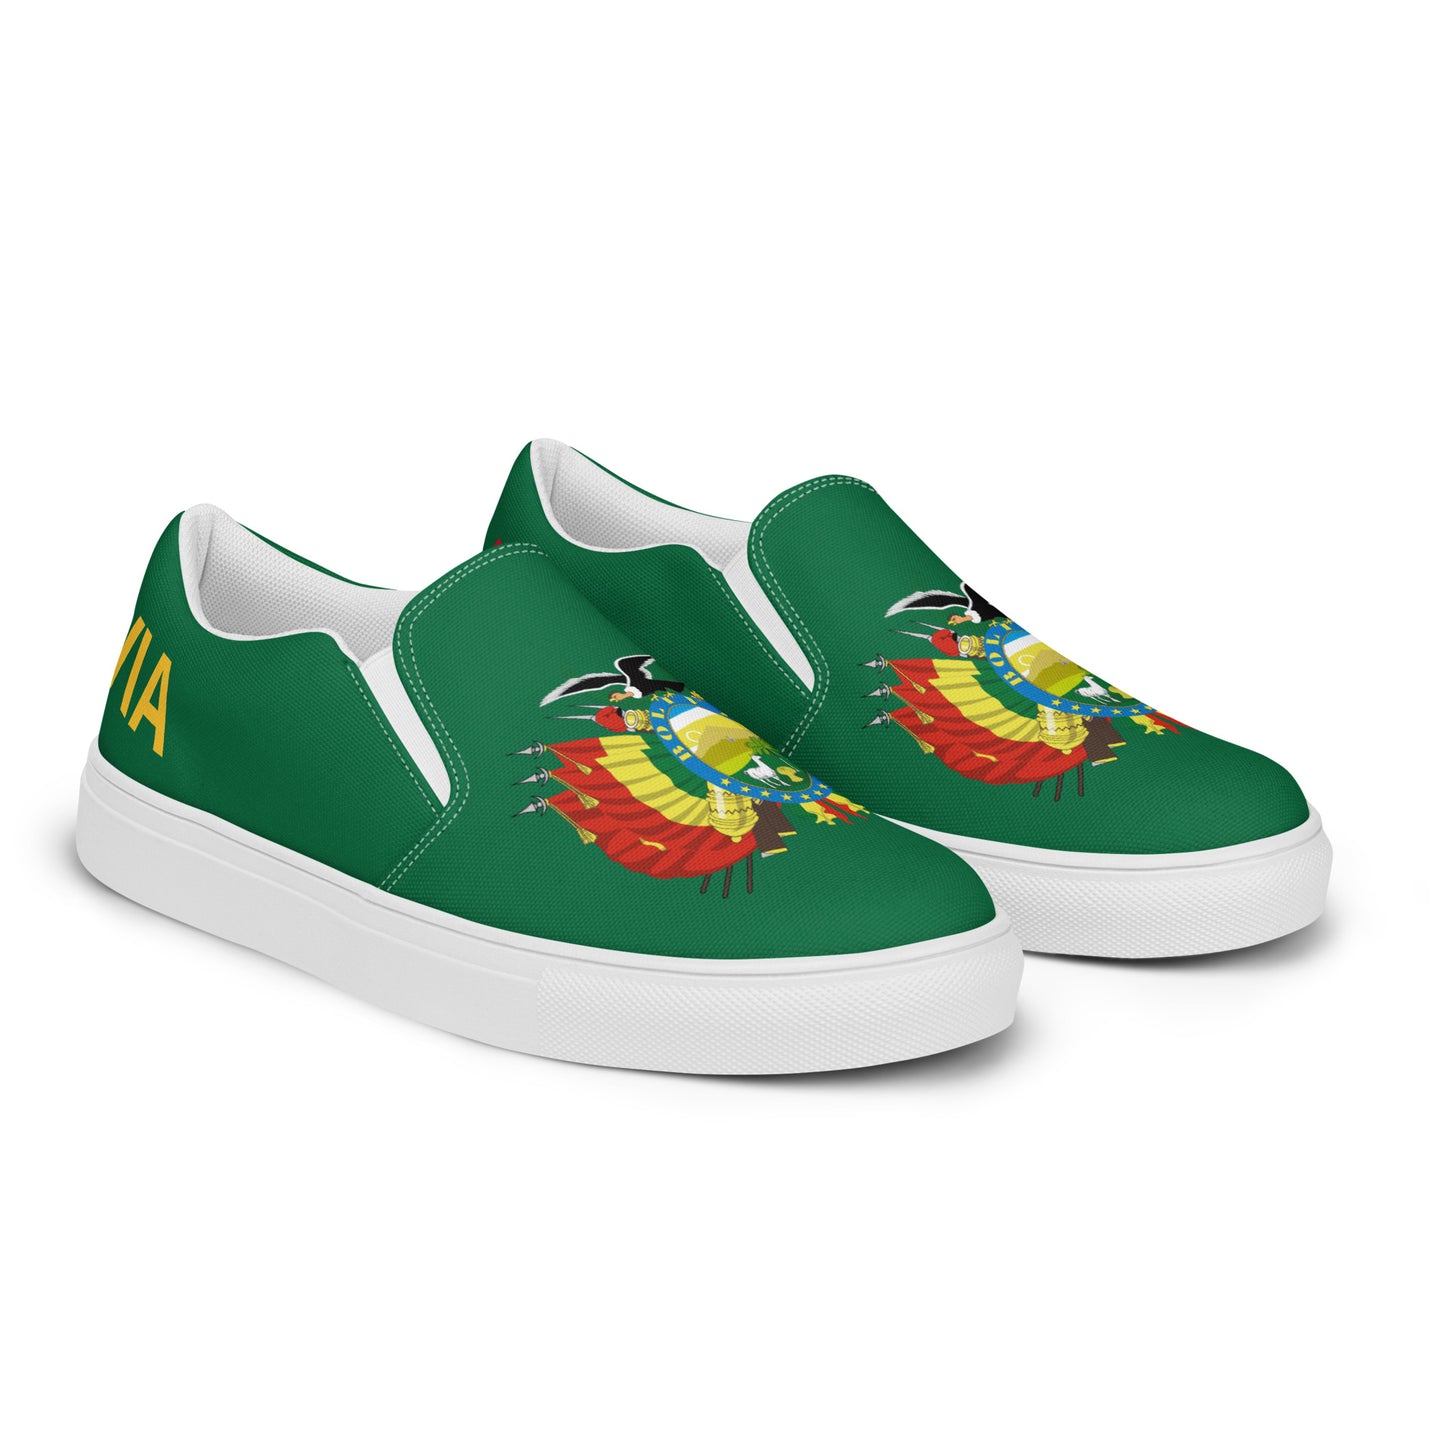 Bolivia - Women - Green - Slip-on shoes